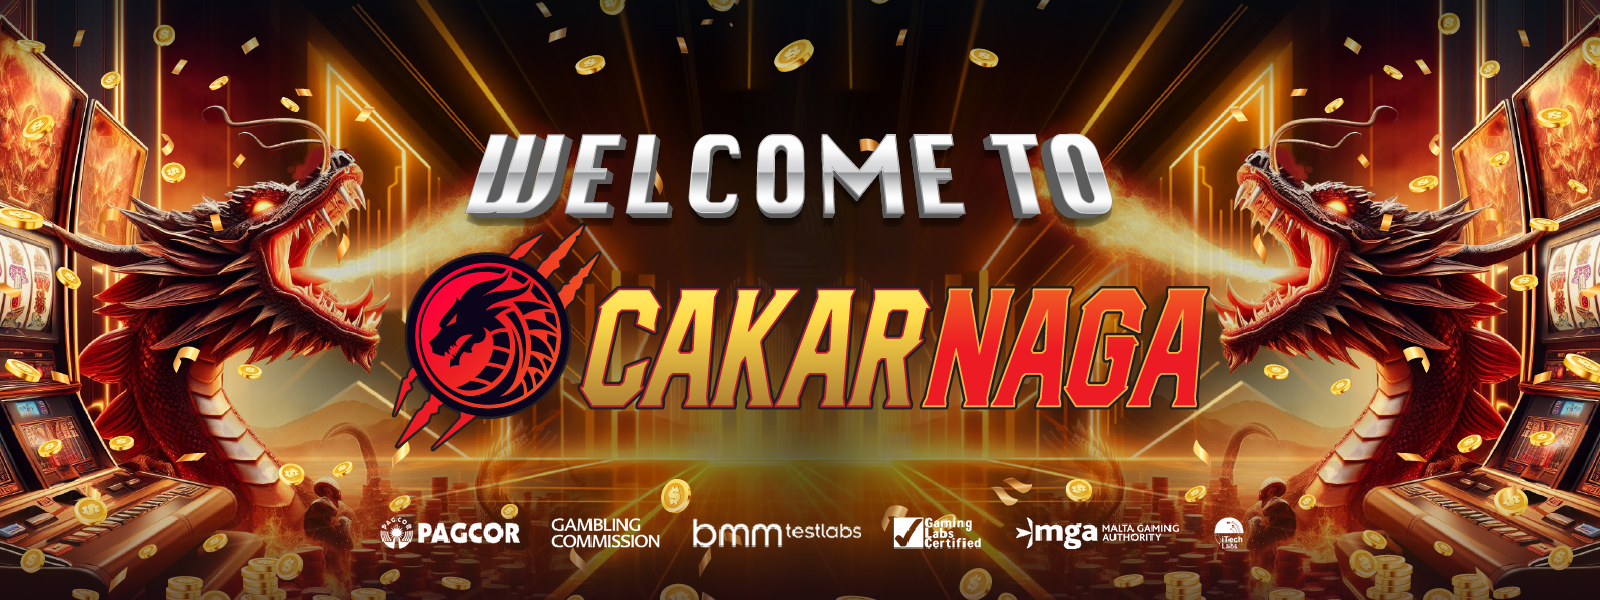 Welcome Cakarnaga